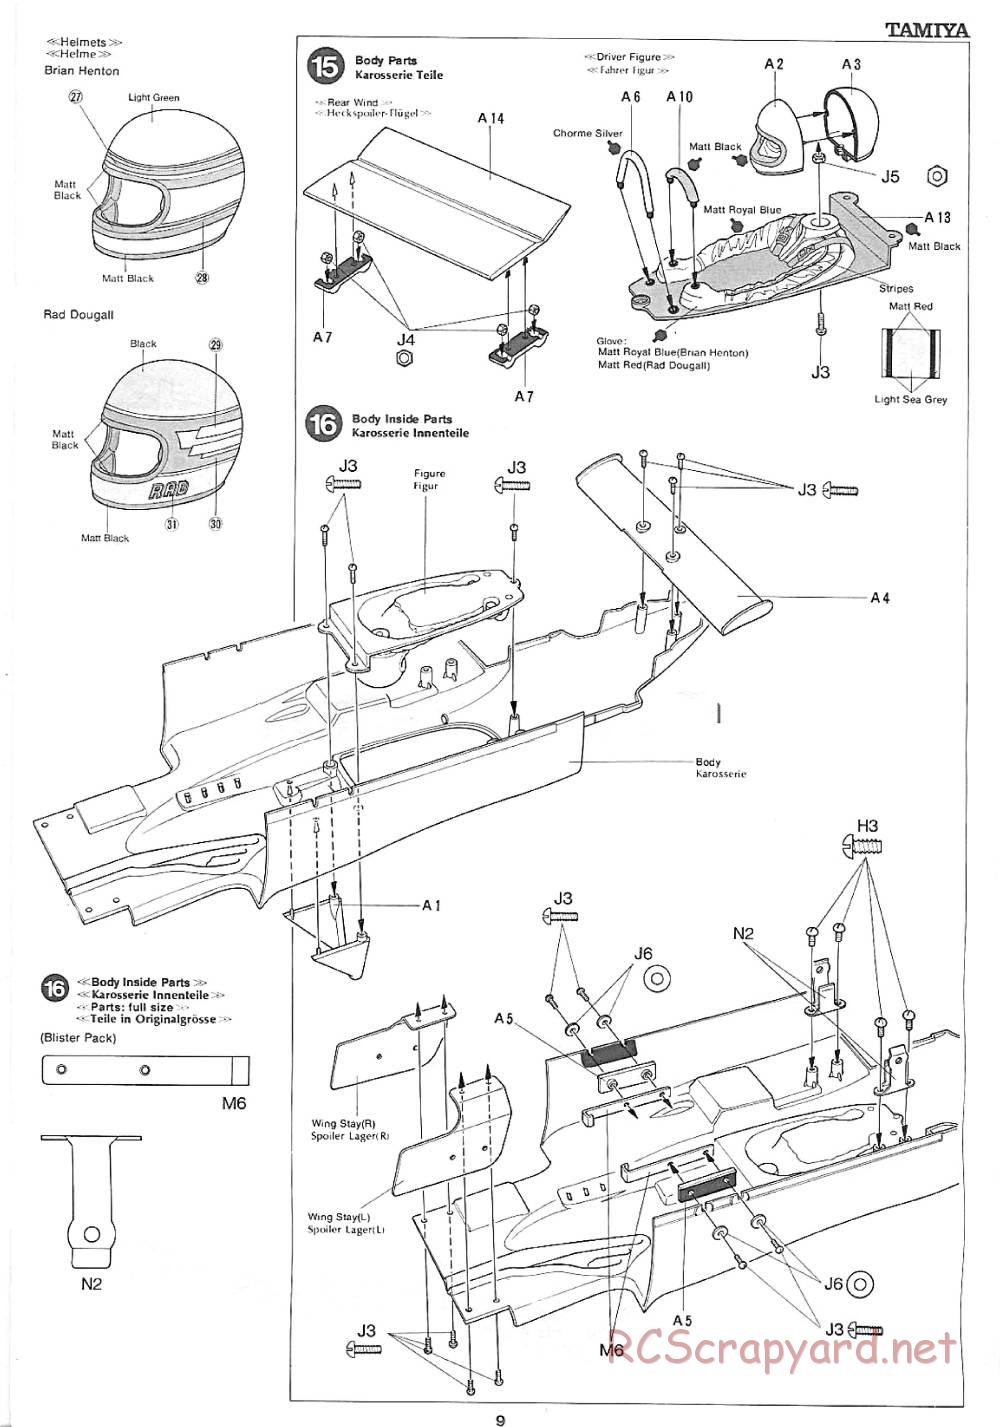 Tamiya - Ralt RT2 Hart 420R (F2) - 58018 - Manual - Page 9